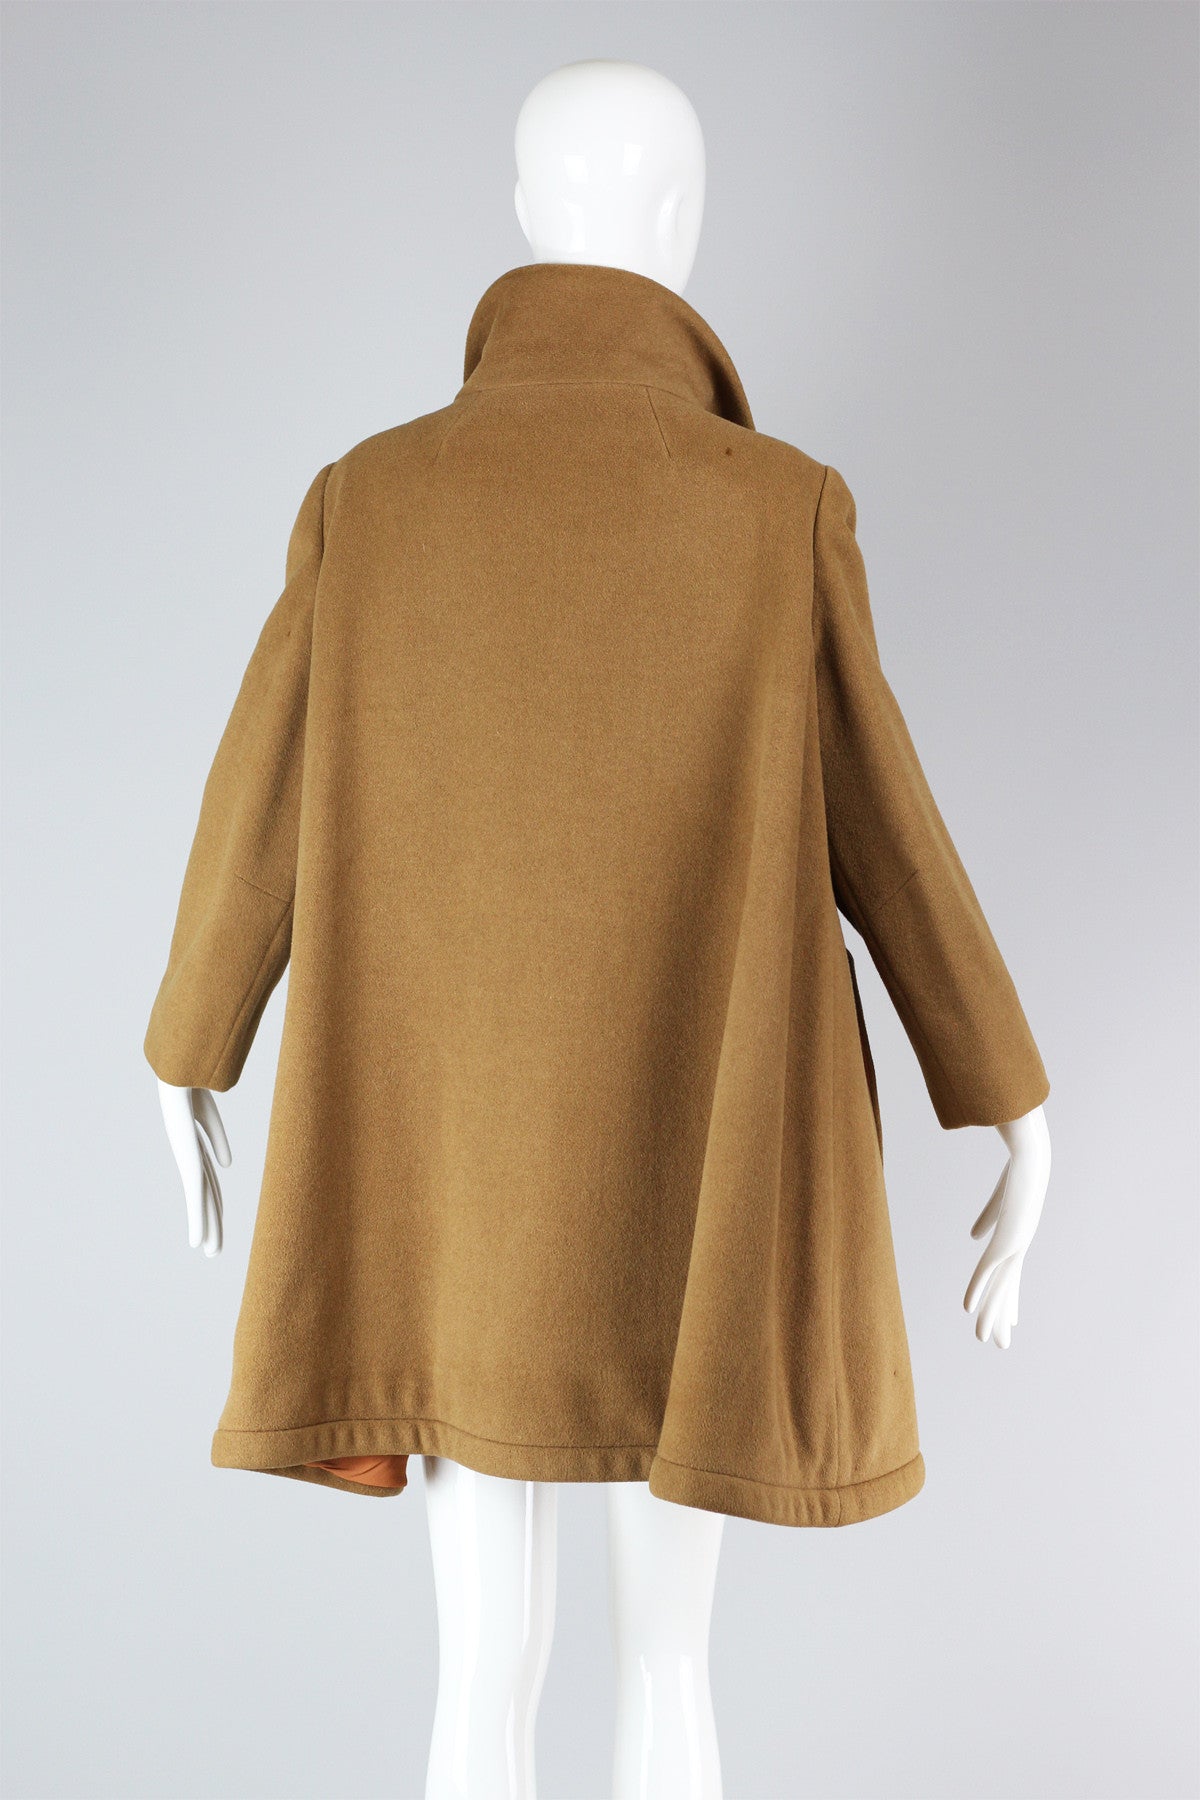 Fantastic 1960s Camel Wool A-Line Coat with Mock Neck